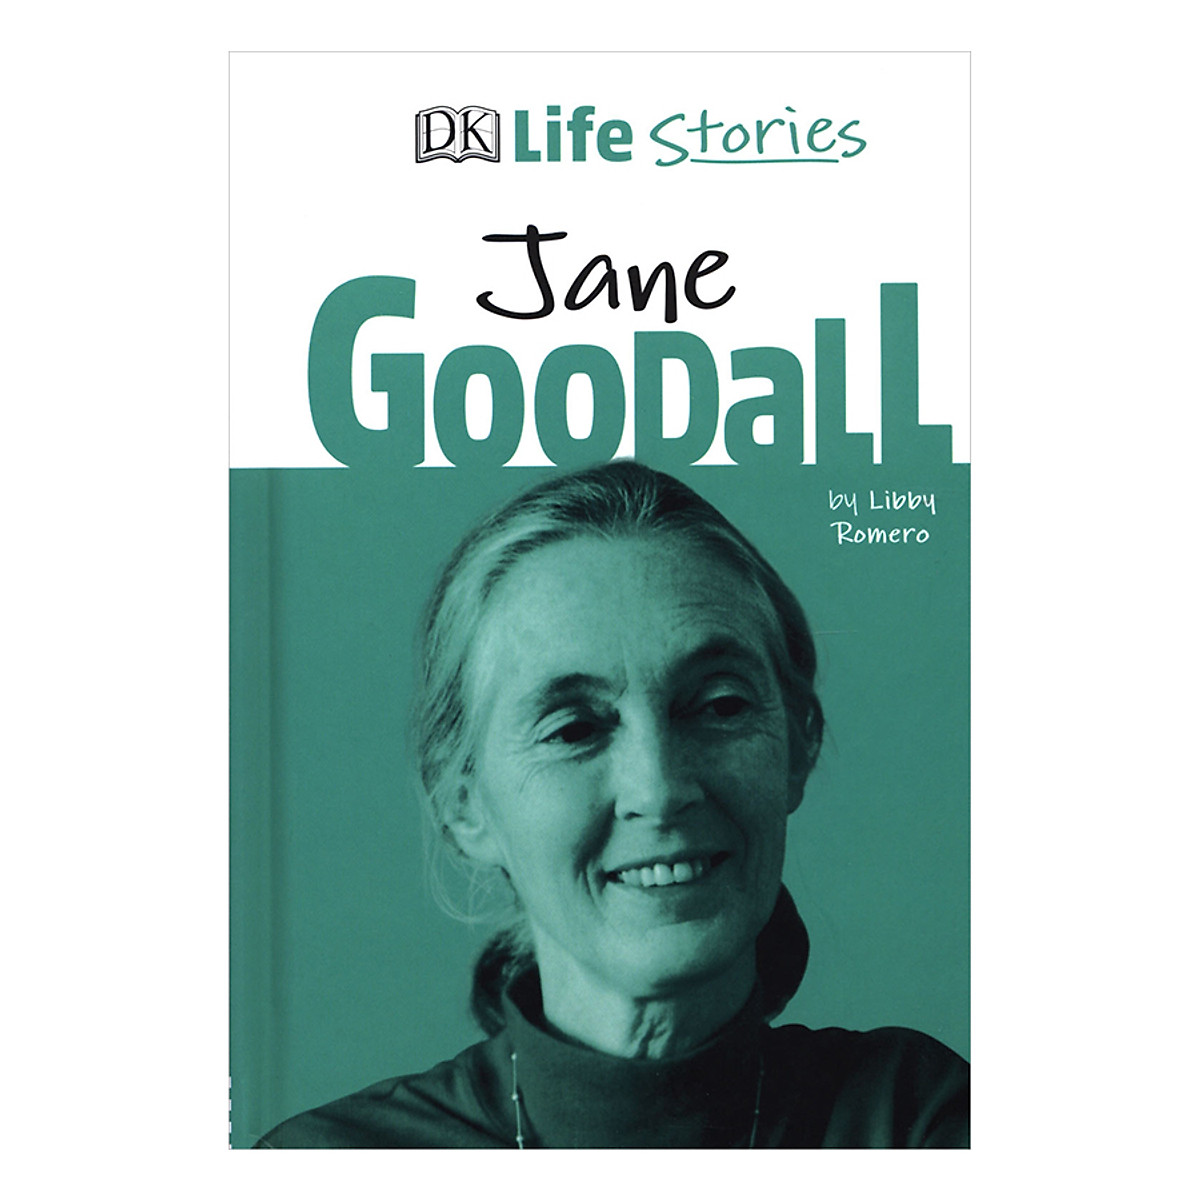 DK Life Stories Jane Goodall - Life Stories (Hardback)